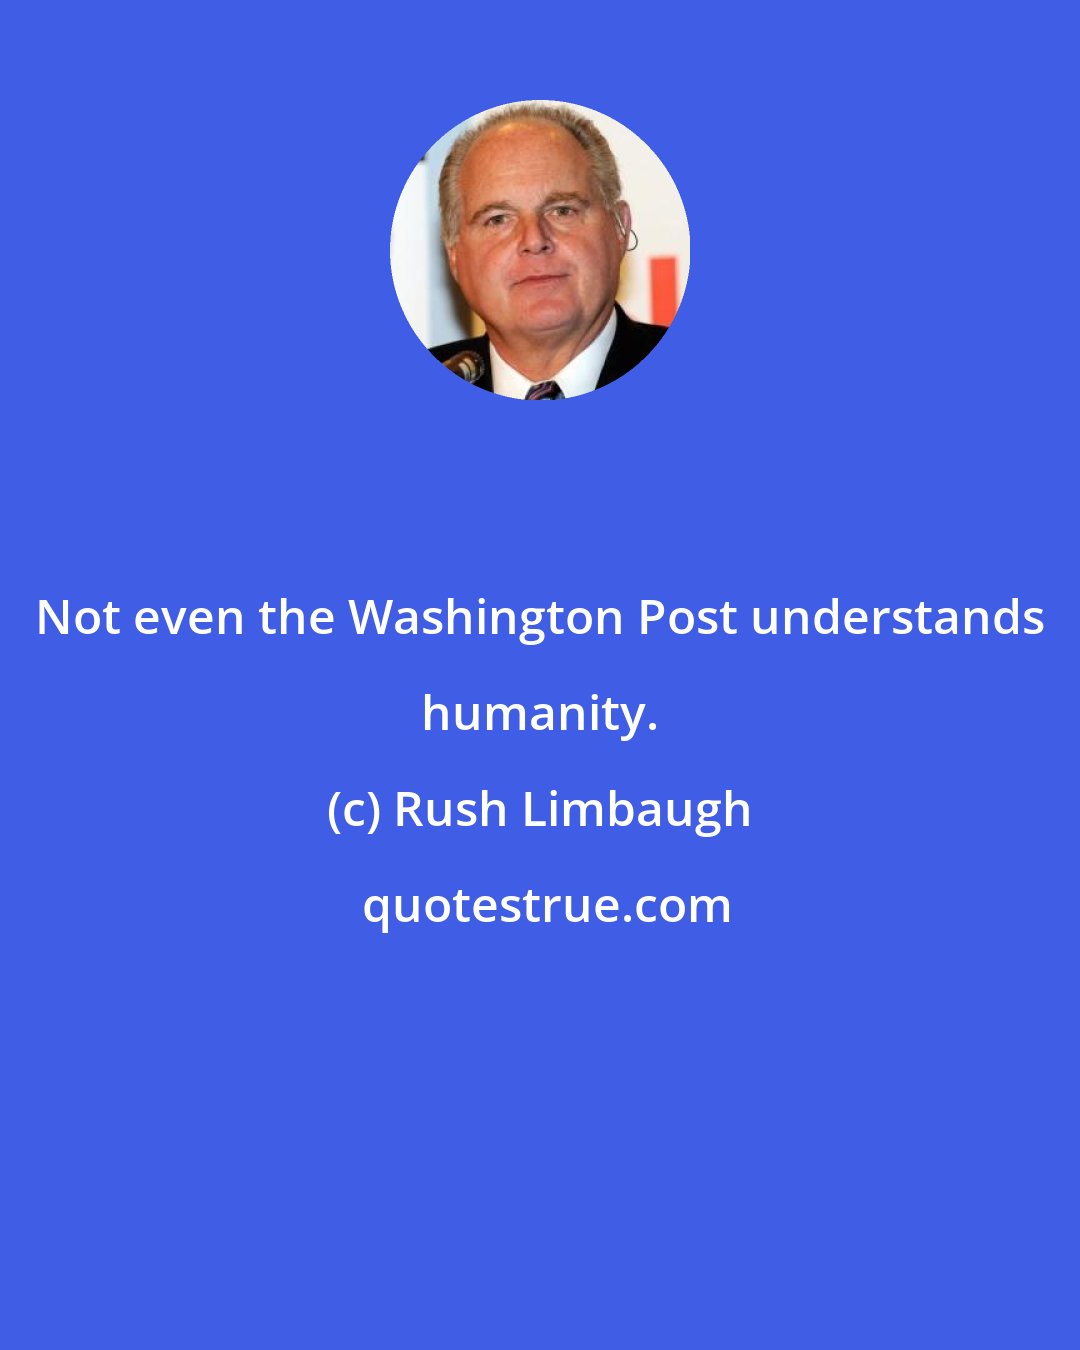 Rush Limbaugh: Not even the Washington Post understands humanity.